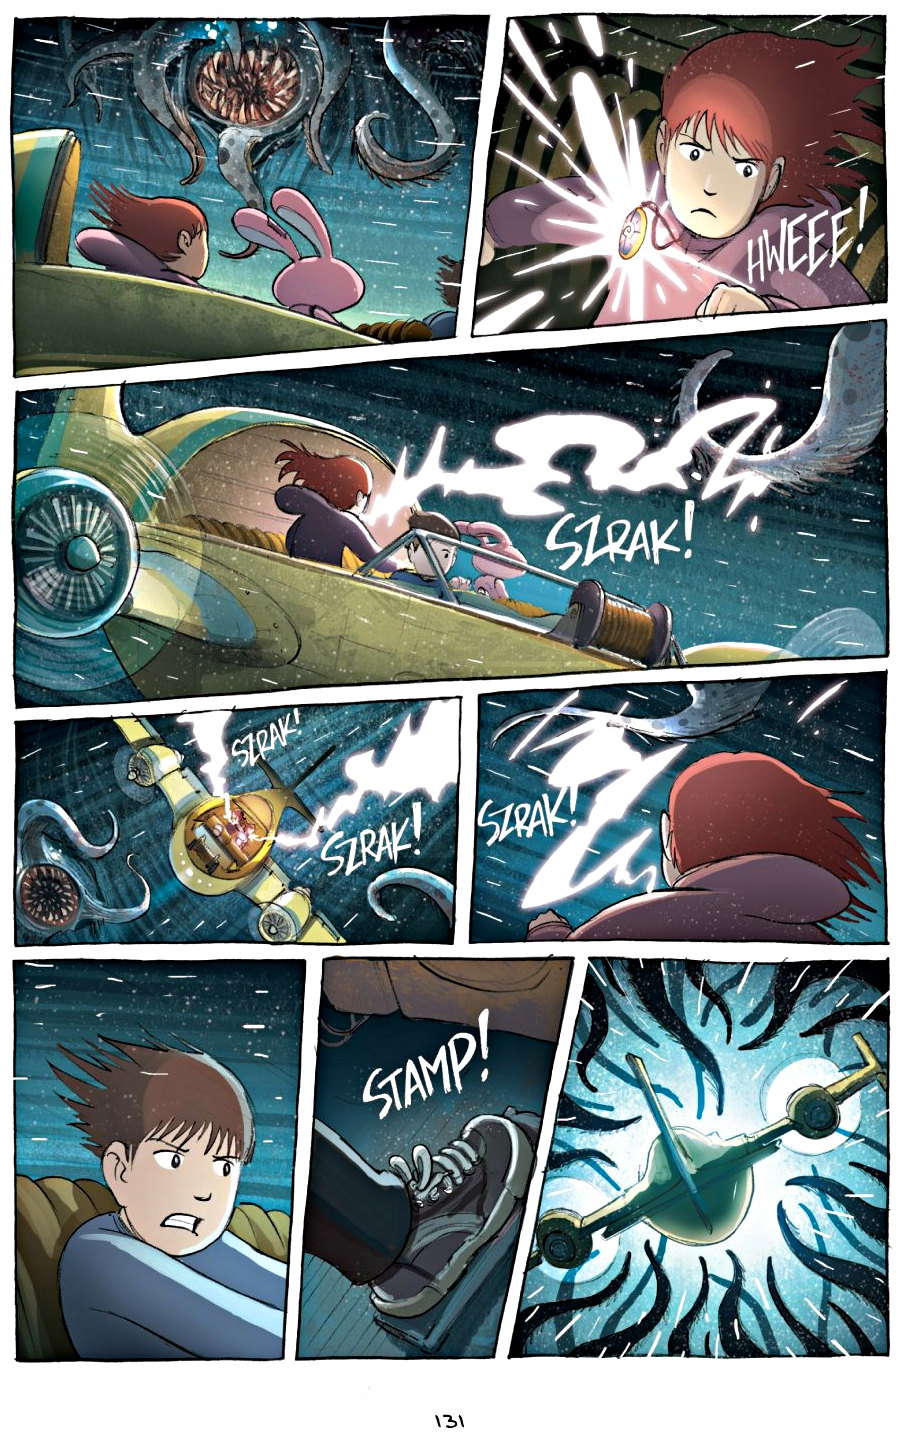 page 131 of amulet 1 stonekeeper graphic novel by kazu kibuishi - read online